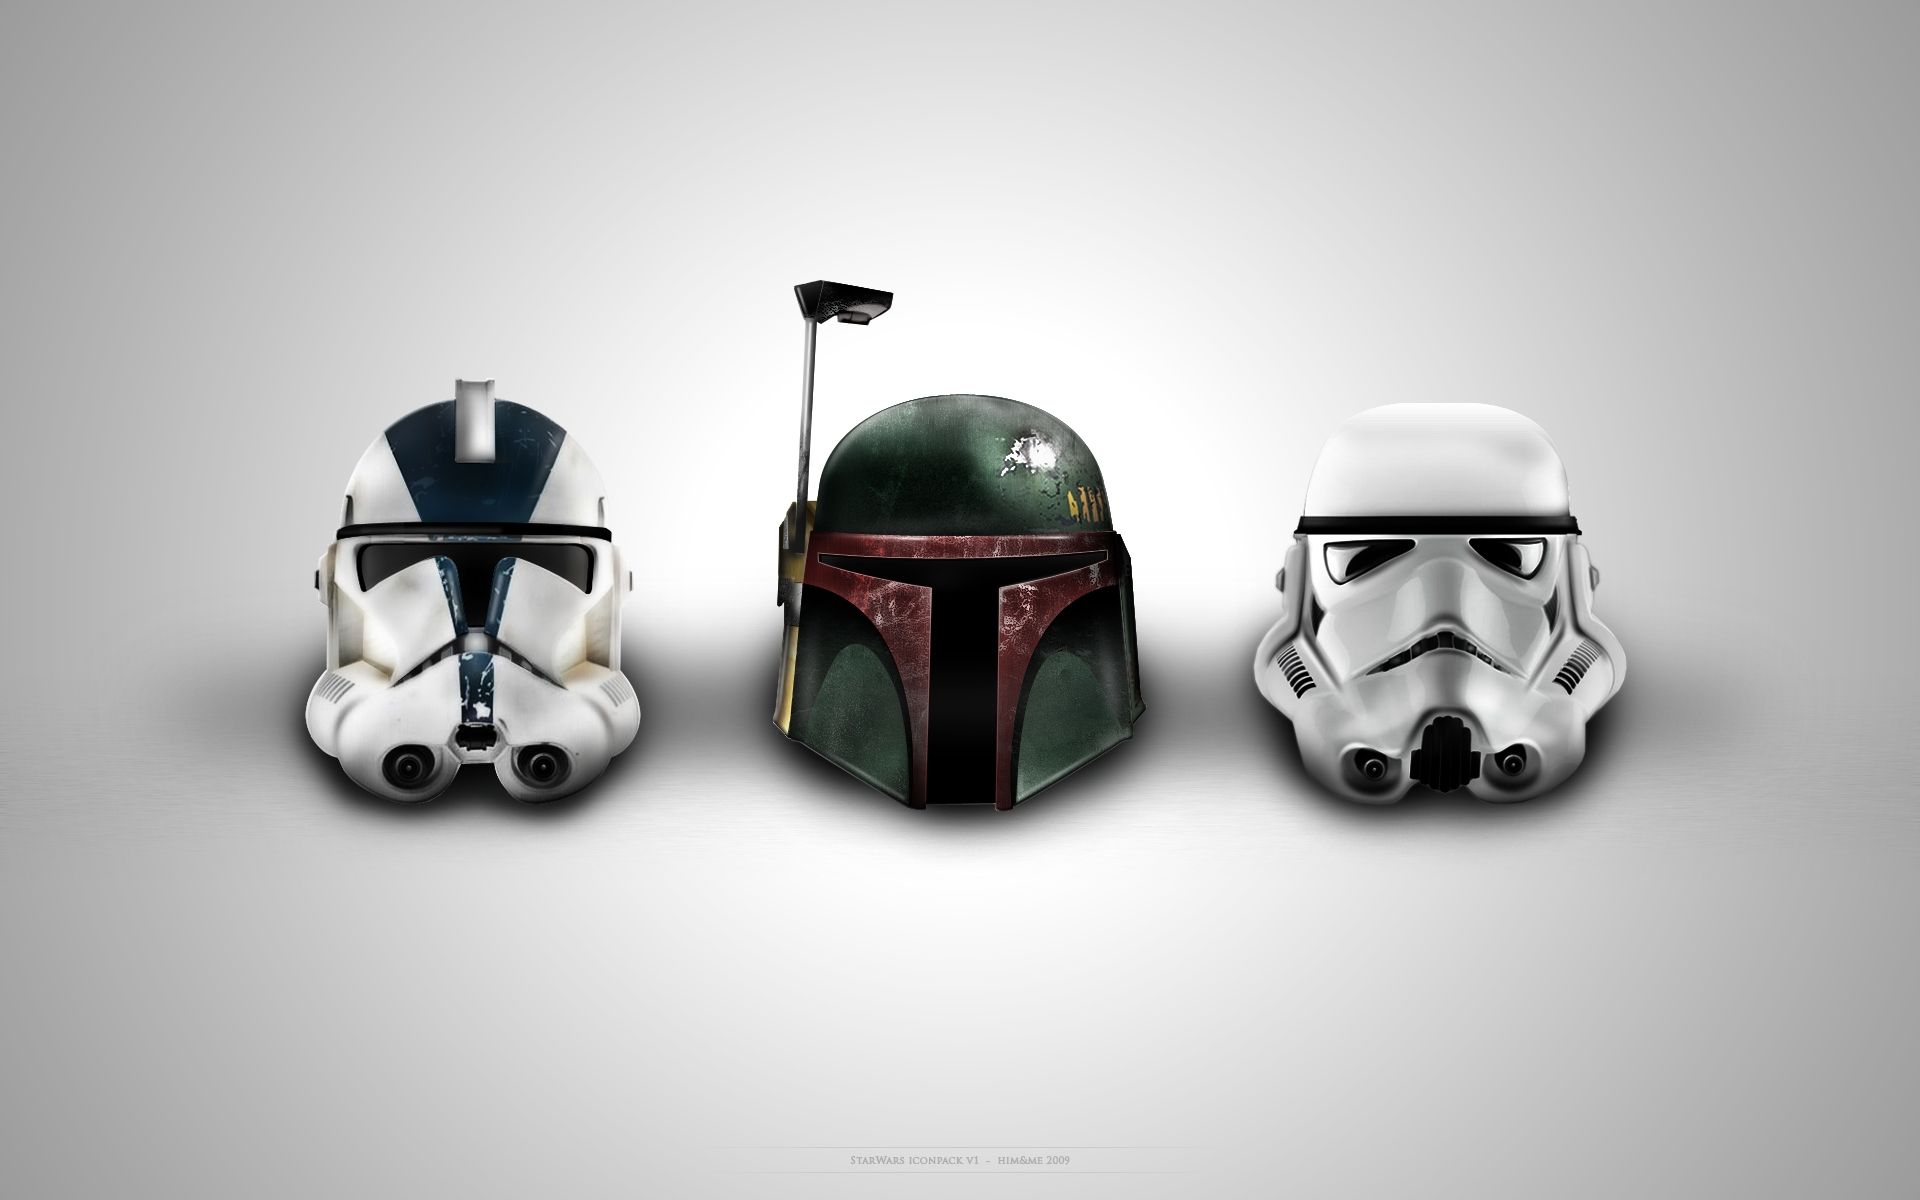 star wars stormtroopers boba fett clone trooper helmets